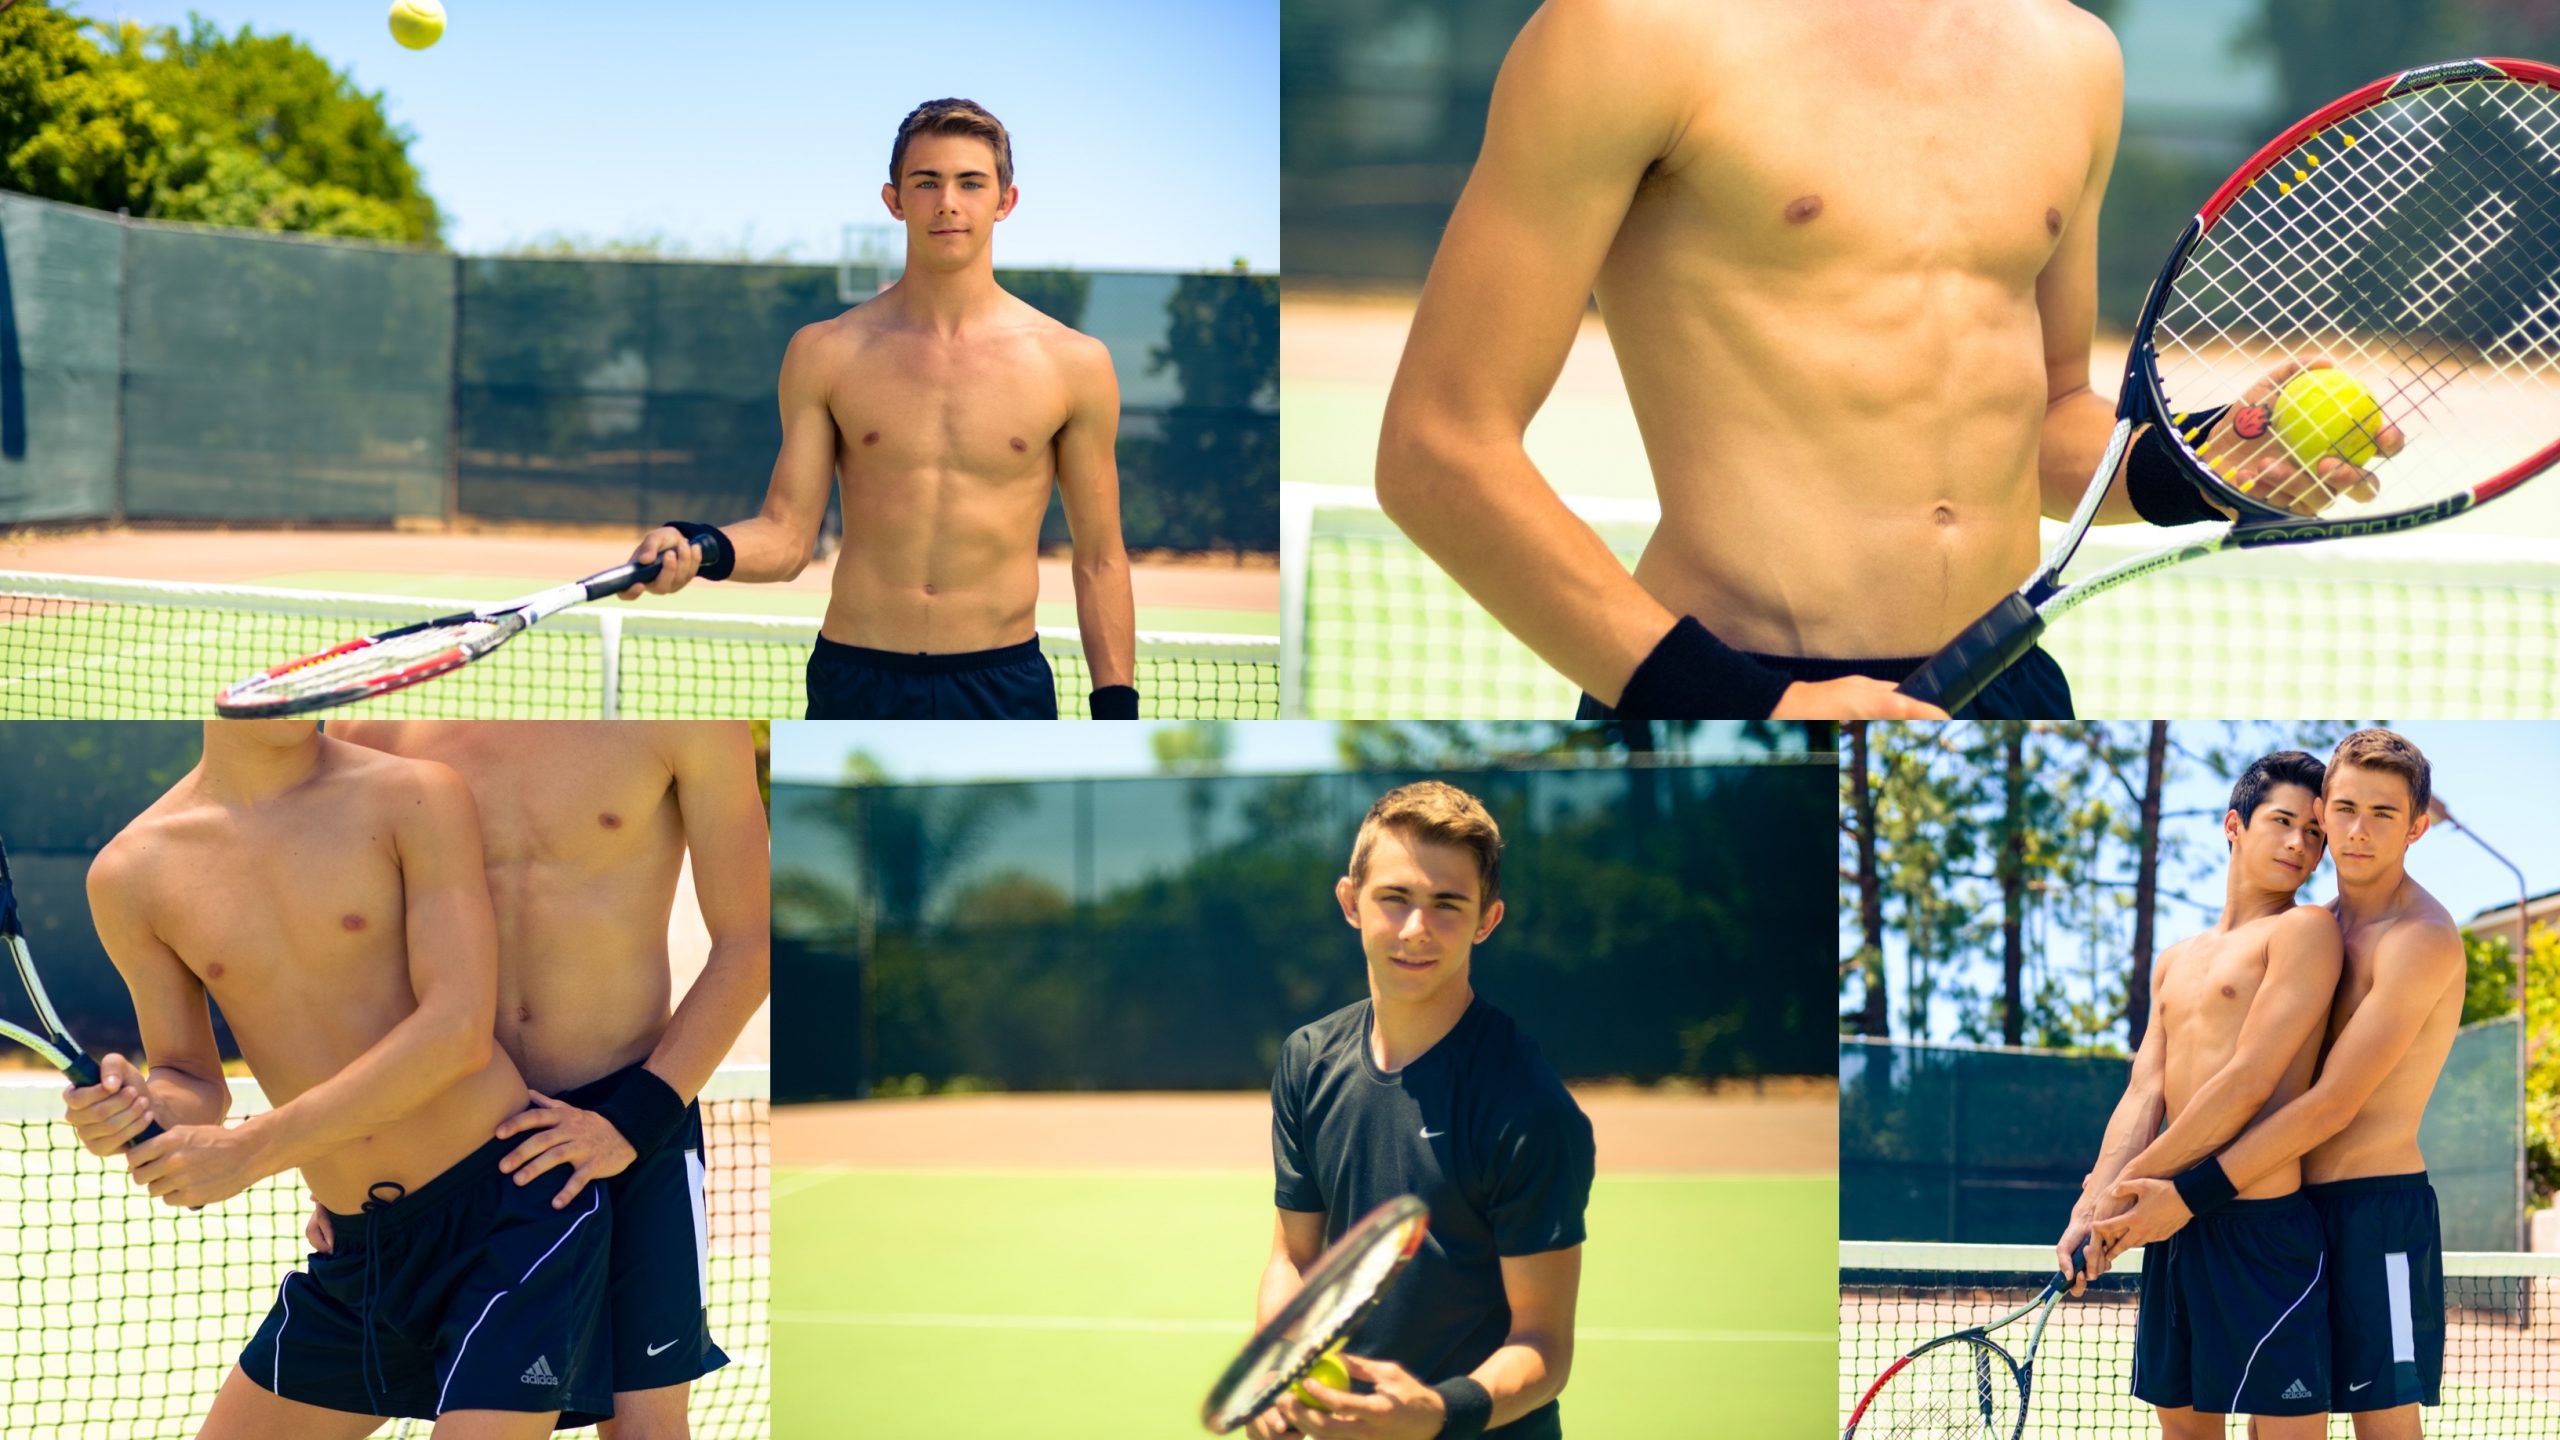 Tennis is kinda sexy